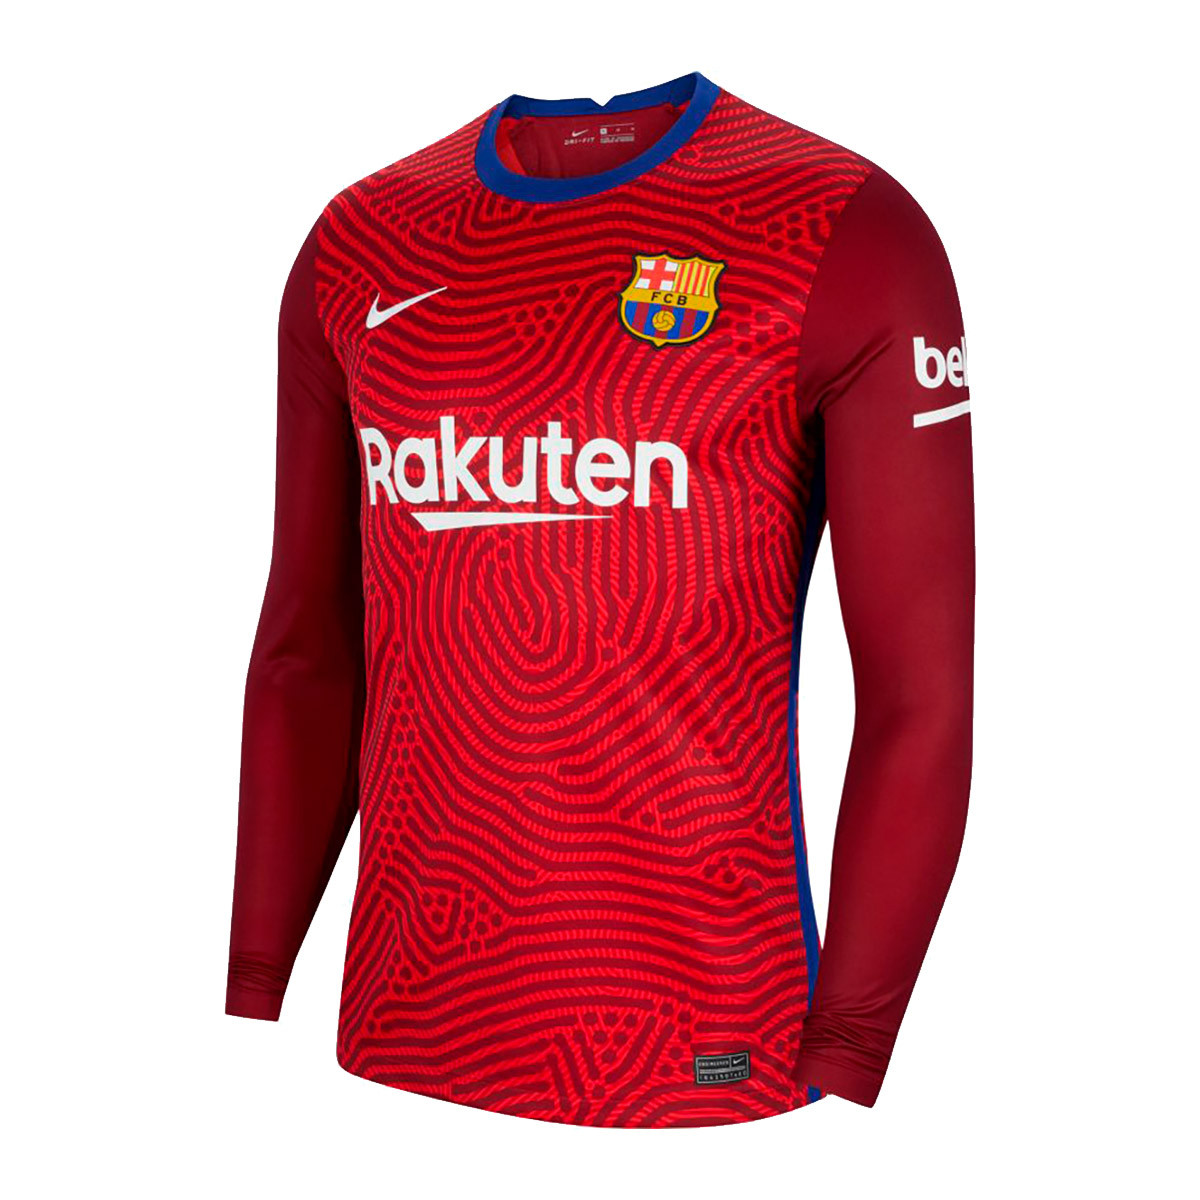 Camiseta Nike Fc Barcelona Stadium Primera Equipacion Portero 2020 2021 University Red Team Red White 0 